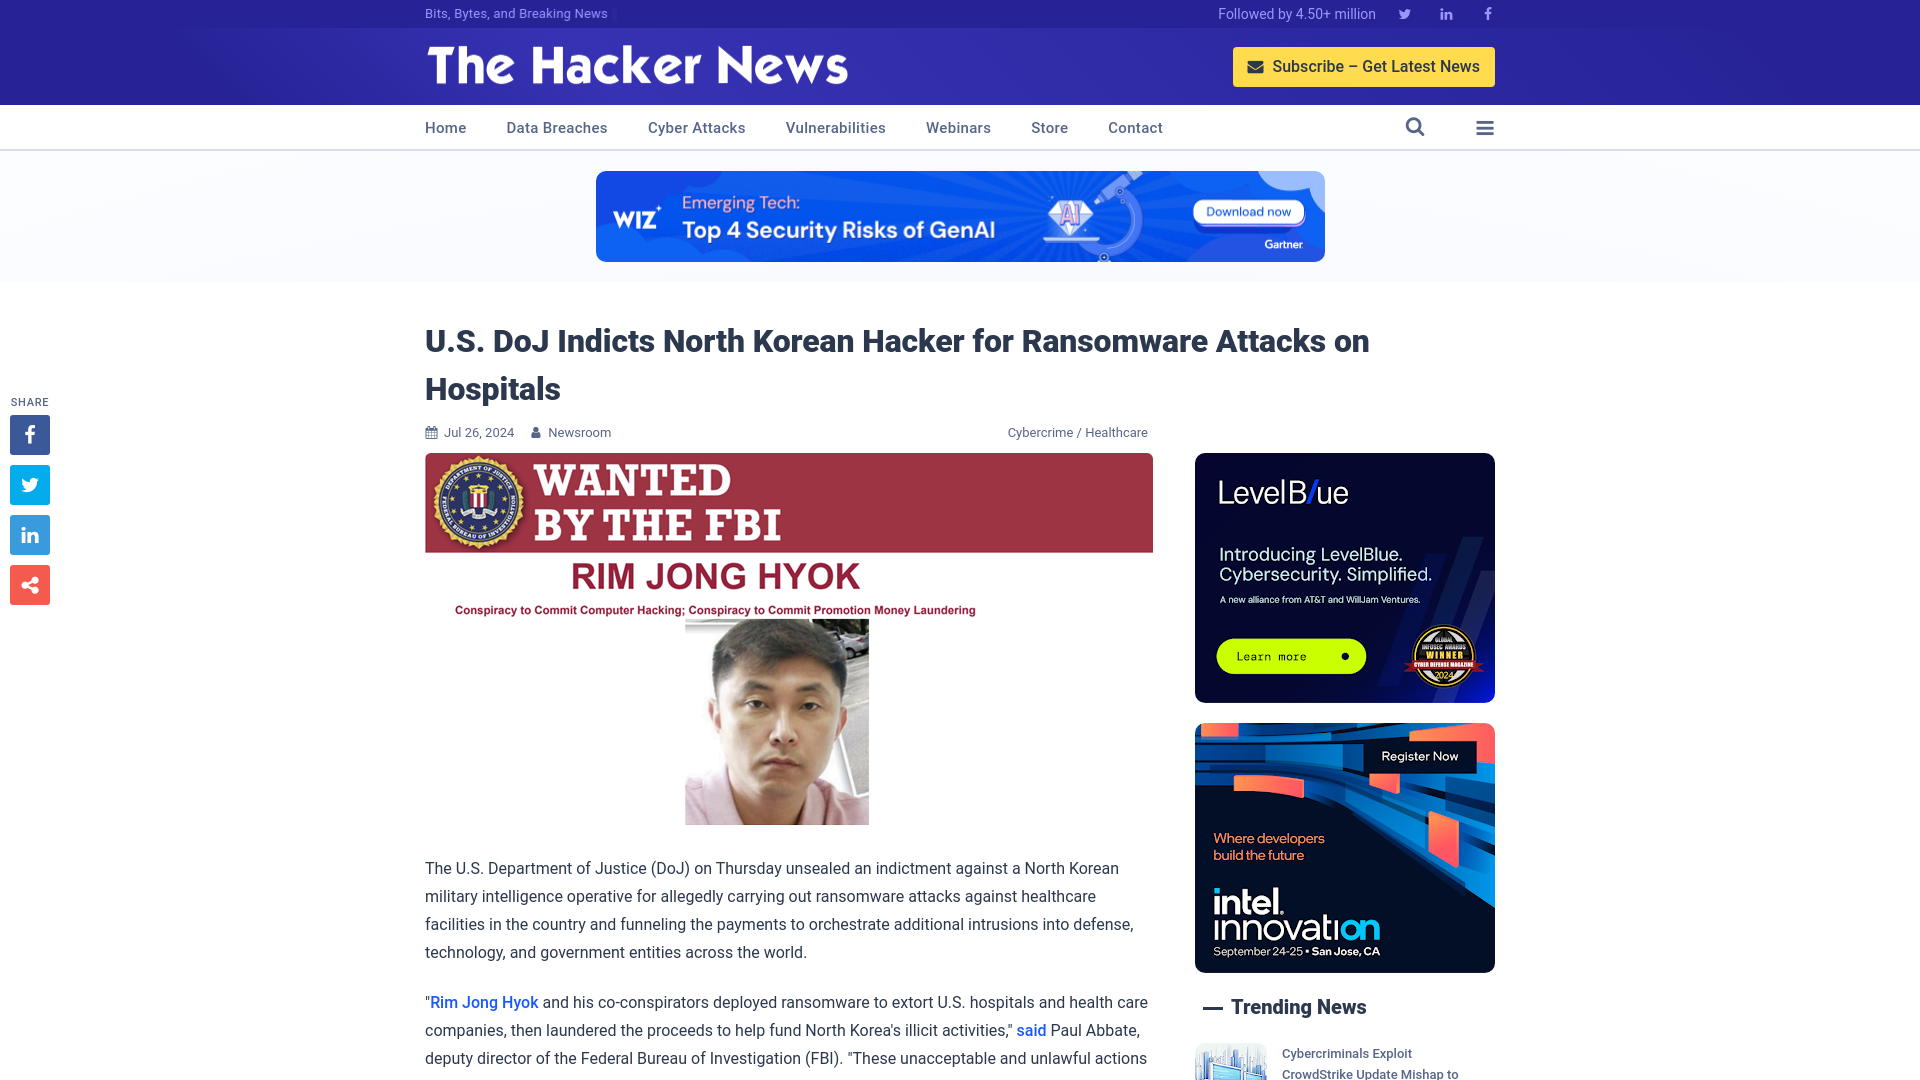 U.S. DoJ Indicts North Korean Hacker for Ransomware Attacks on Hospitals